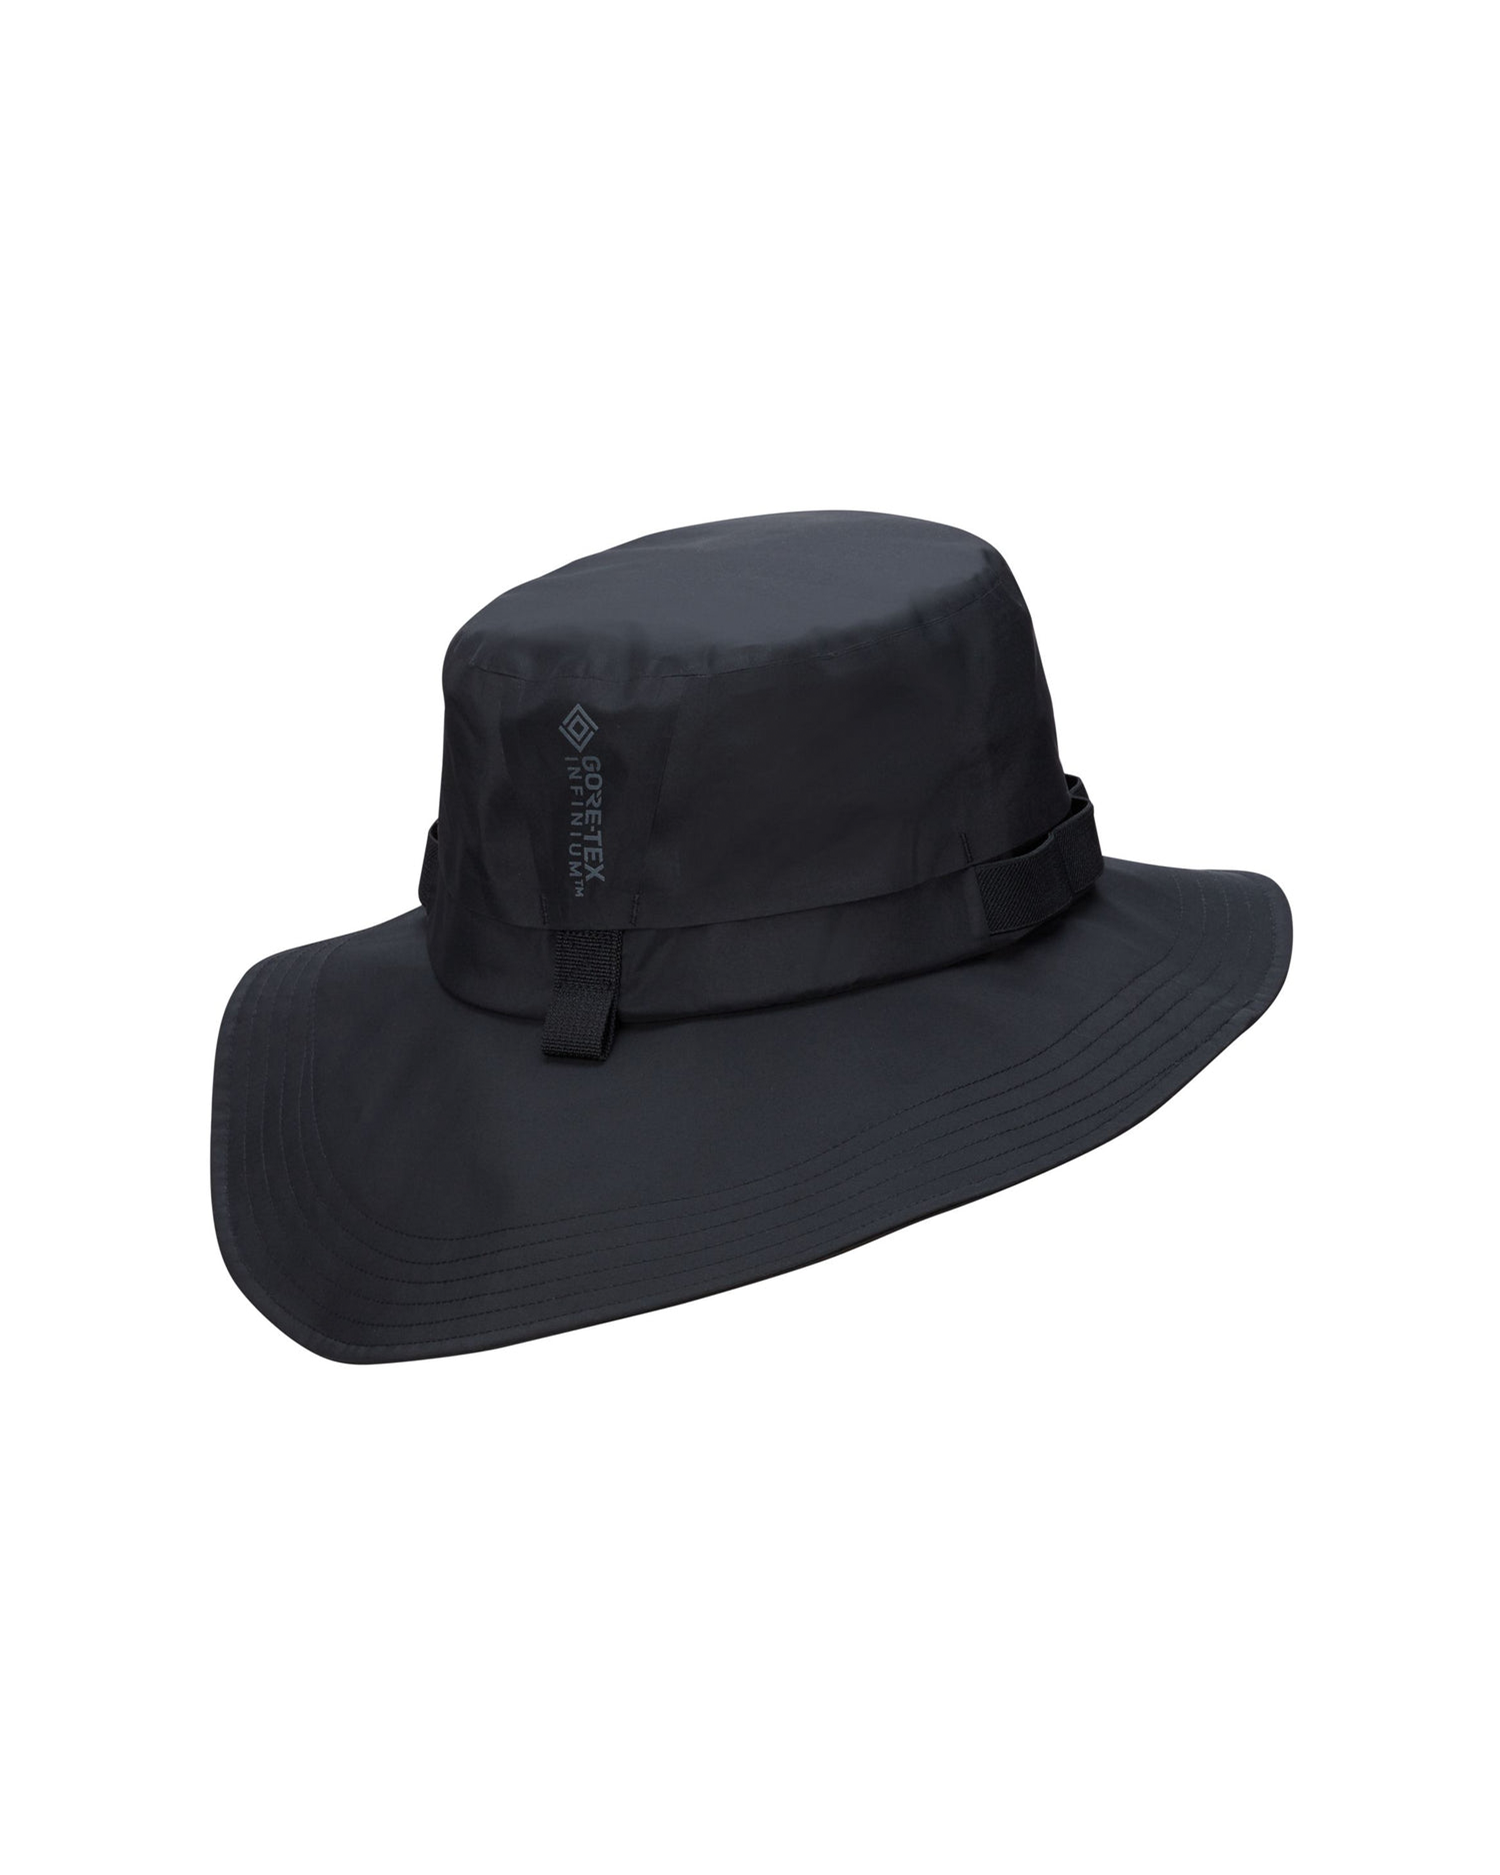 Apex Bucket Hat - Black